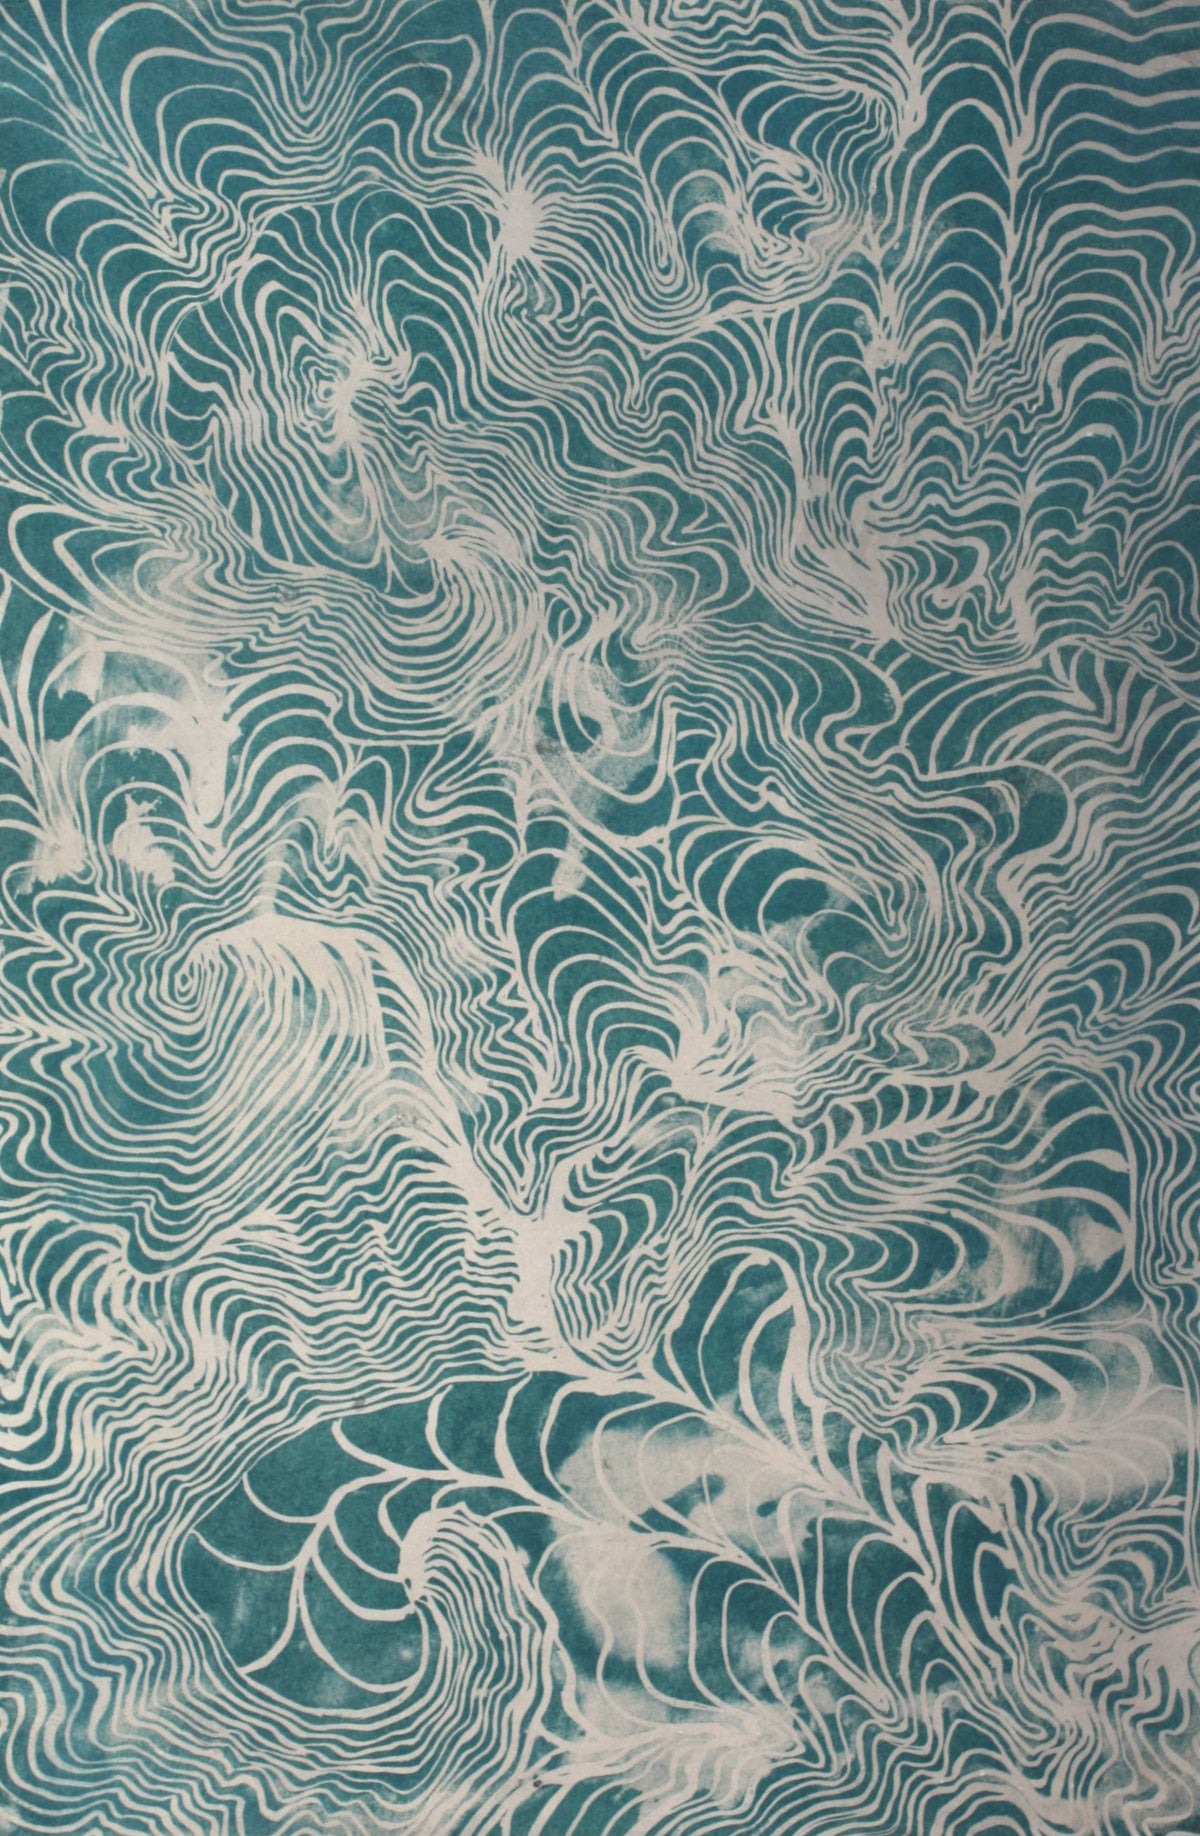 Waves (unframed)